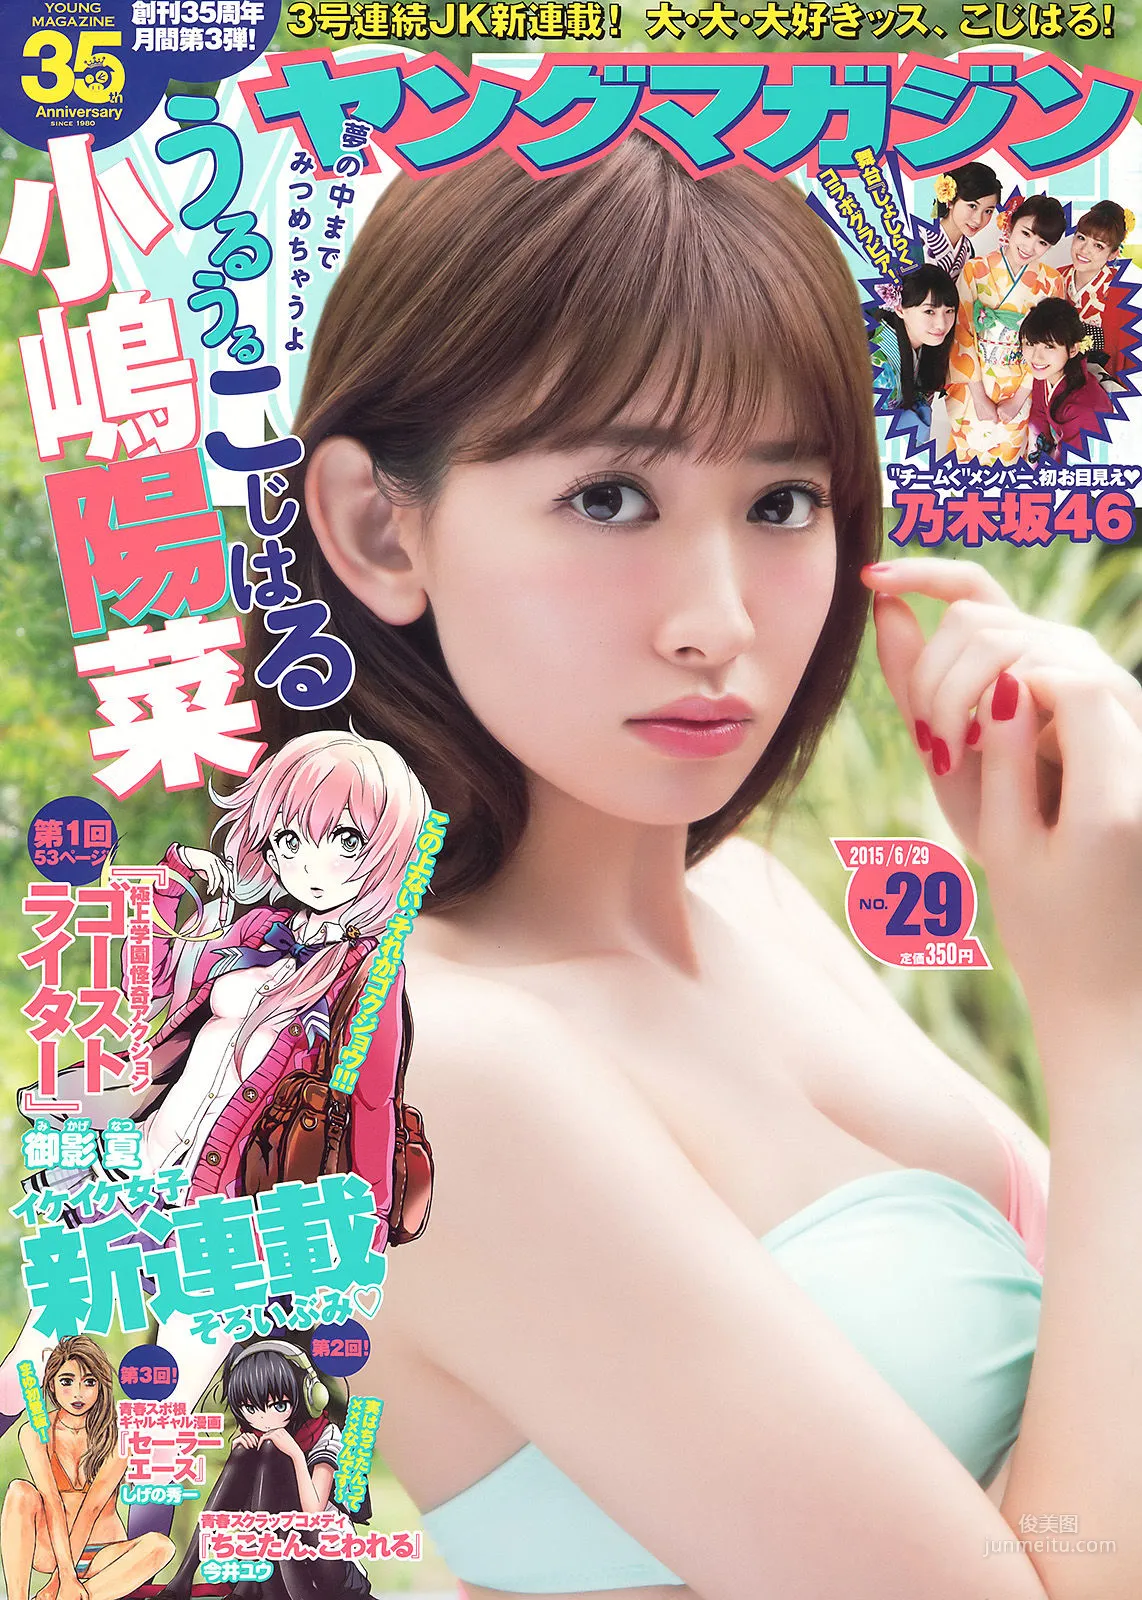 [Young Magazine] 小嶋陽菜 乃木坂46 2015年No.29 写真杂志1